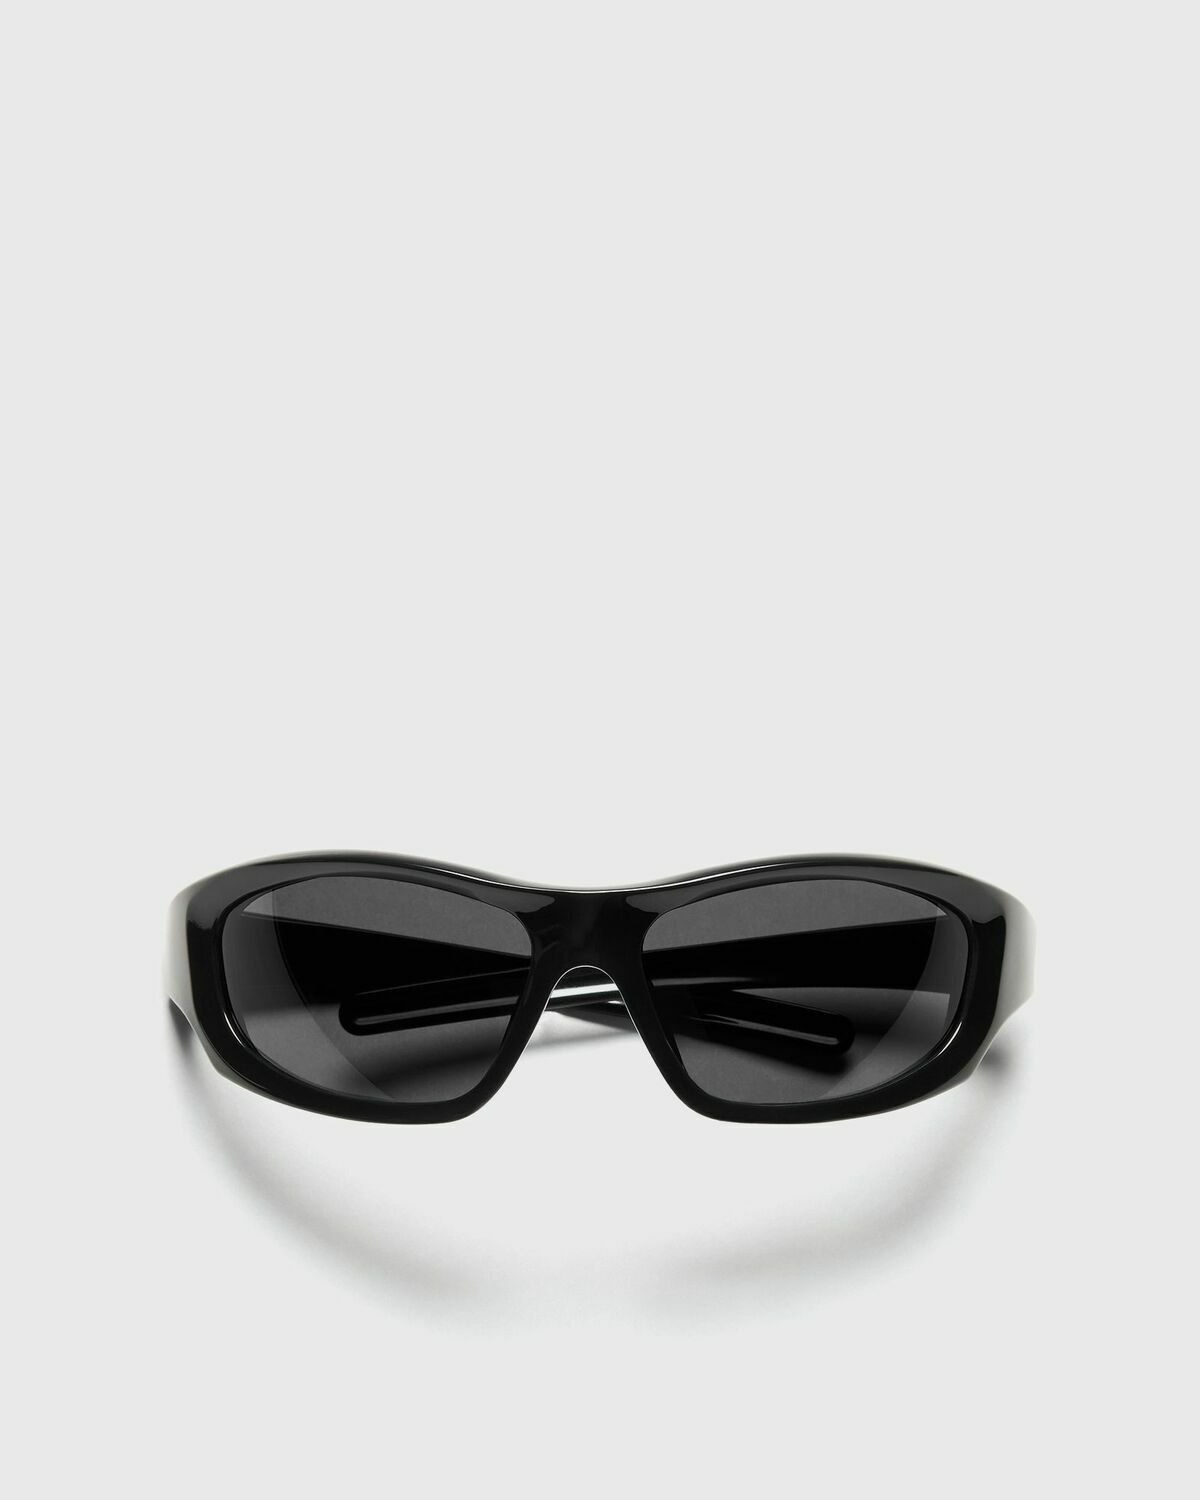 Chimi Eyewear Flash Black Sunglasses Black - Mens - Eyewear